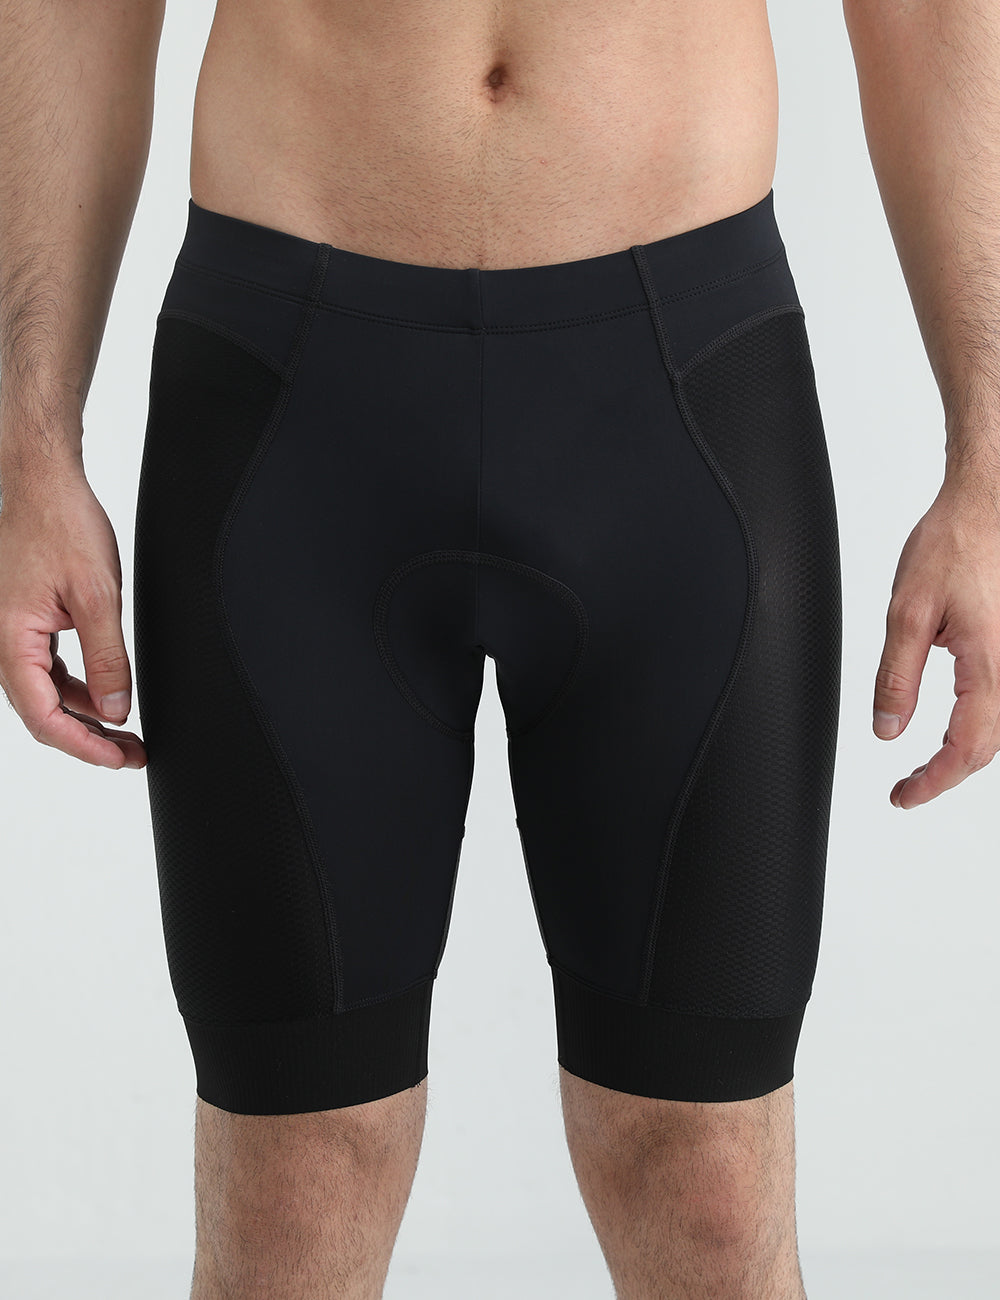 Men's Bike Cycling Absorbent Shorts